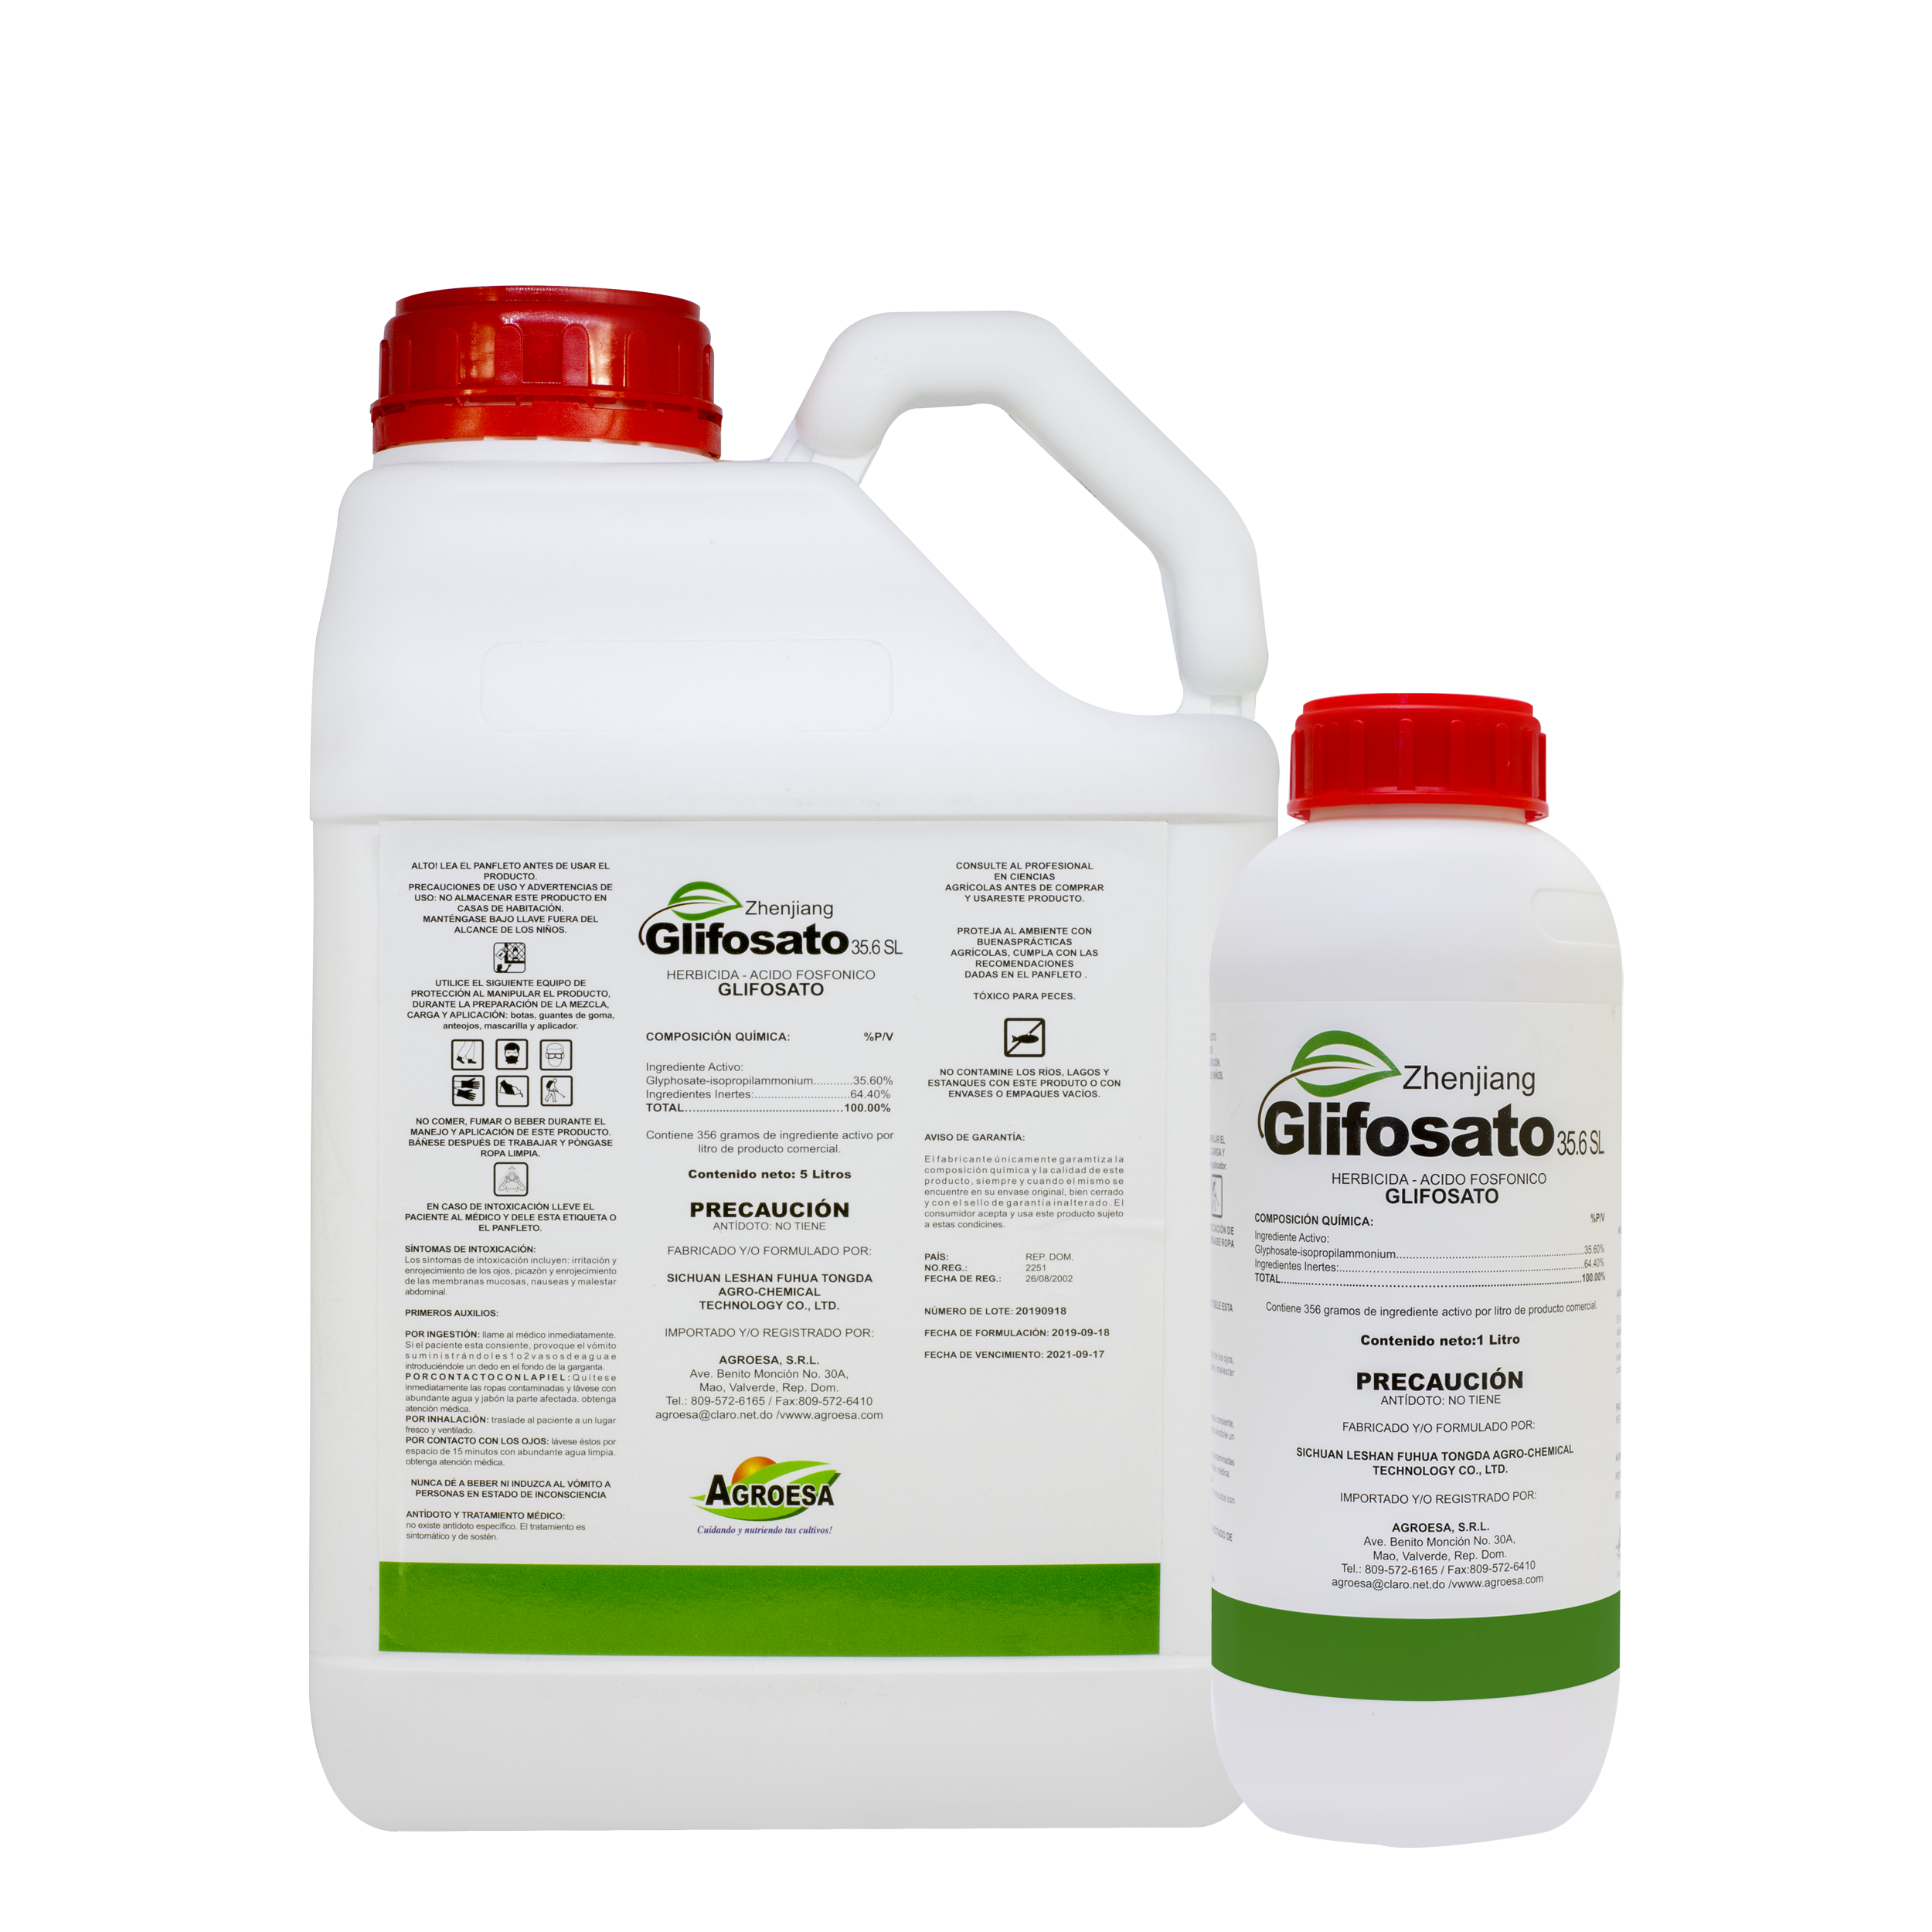 Herbicida Glifosato 62% Eq Acido 50,6%